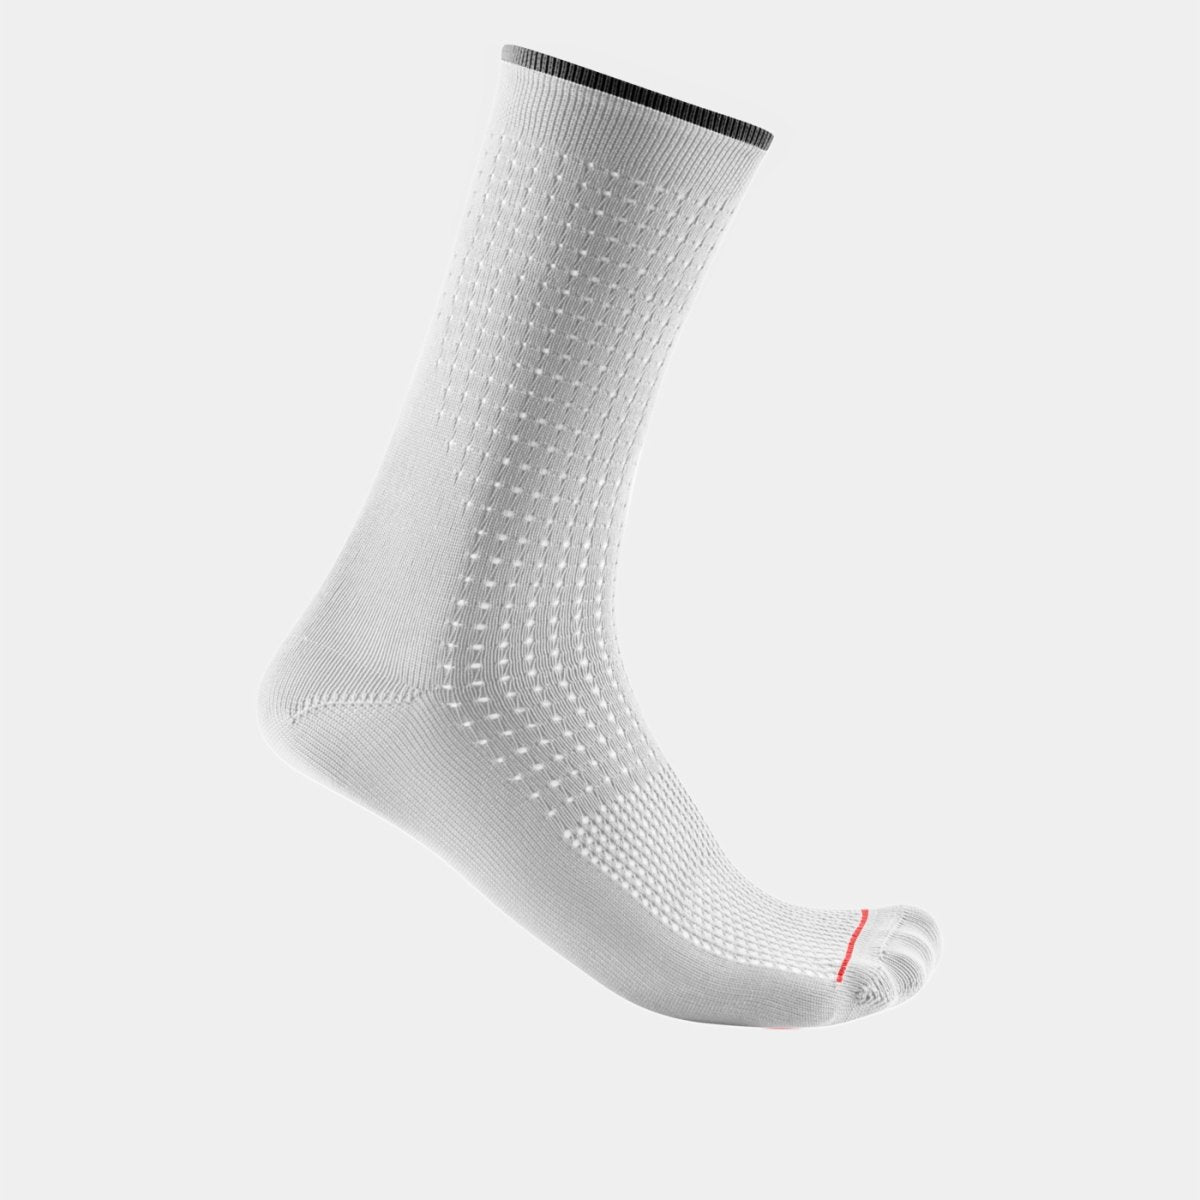 Castelli Premio 18 Men's Cycling Socks (White)